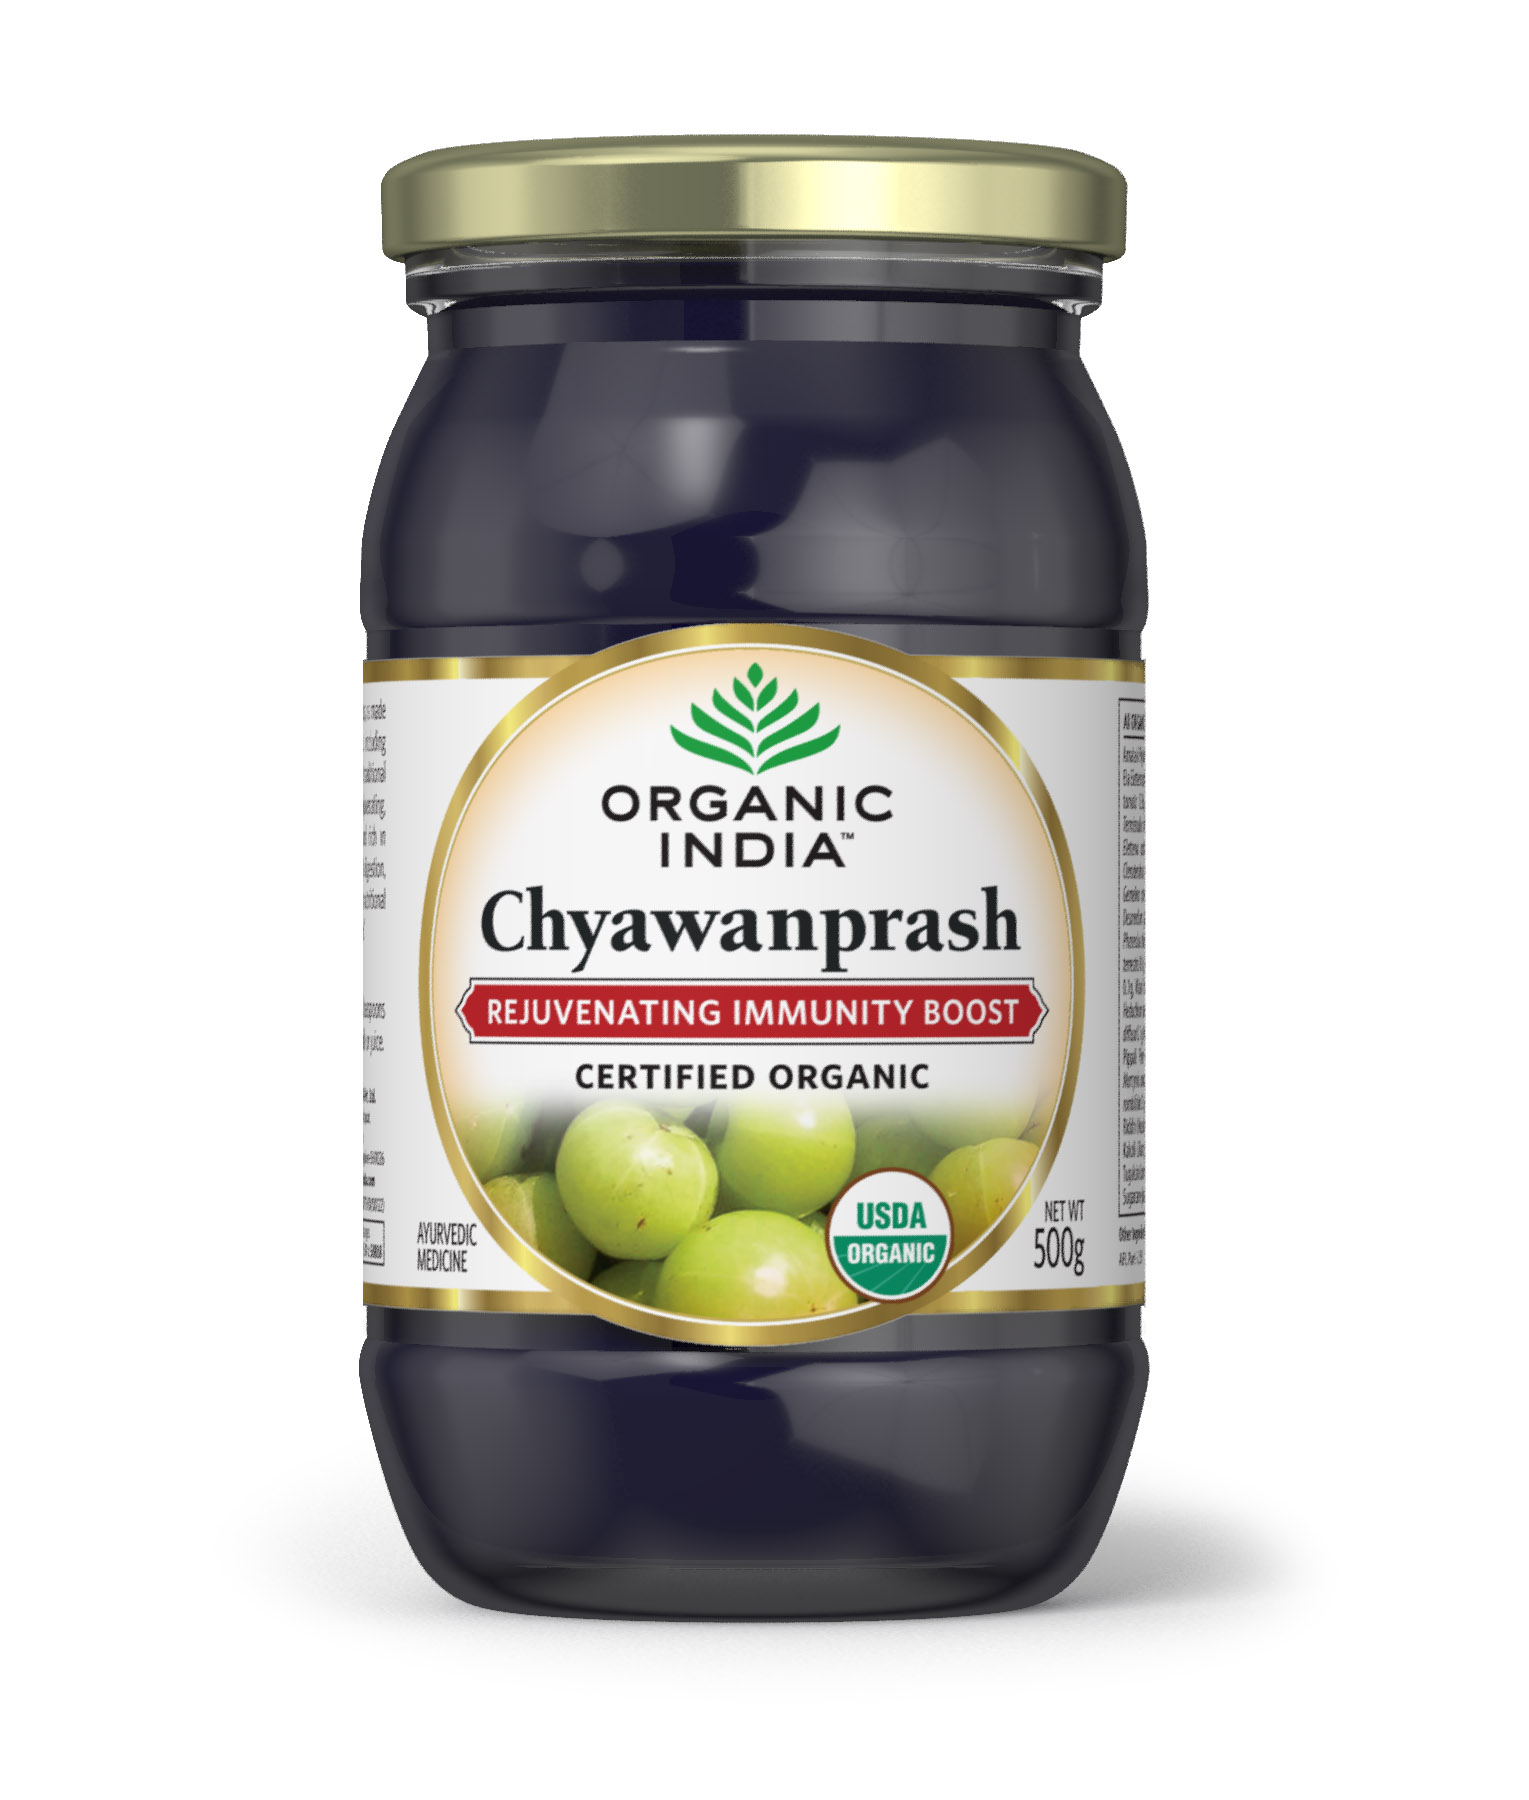 Buy Organic India Chywanprash at Best Price Online